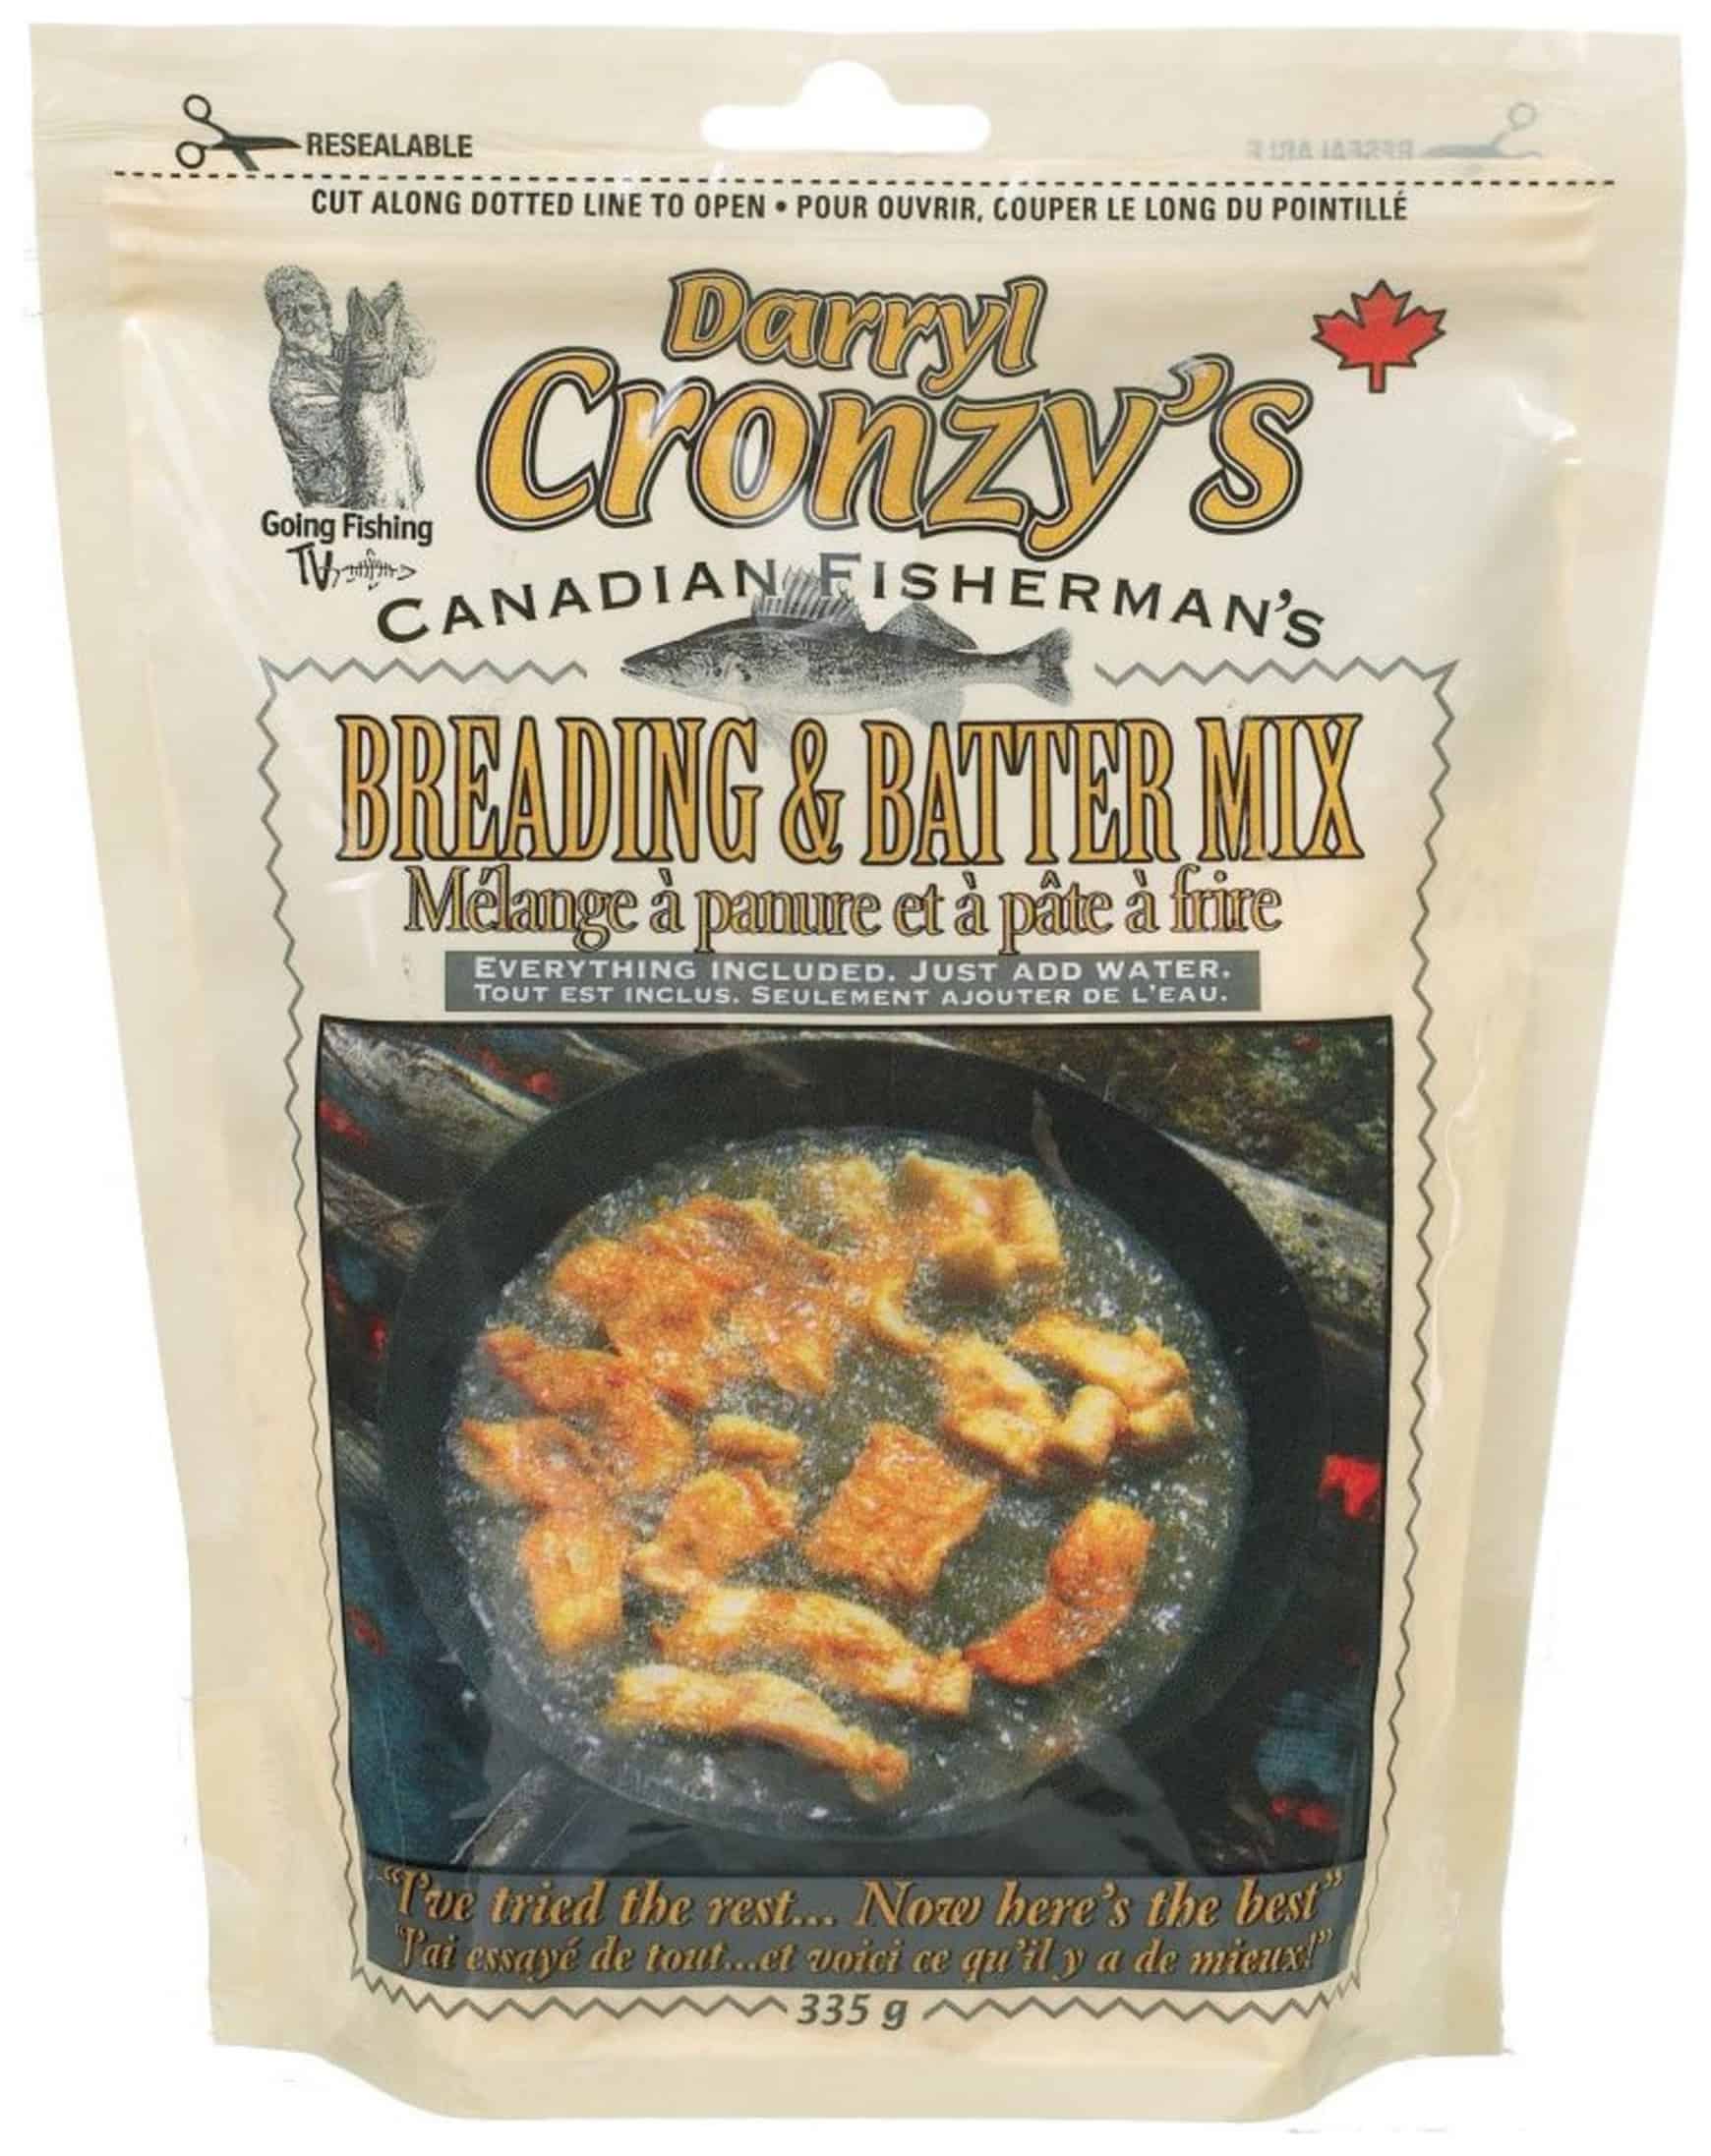 Canadian Fisherman’s Breading & Batter Mix – 335g